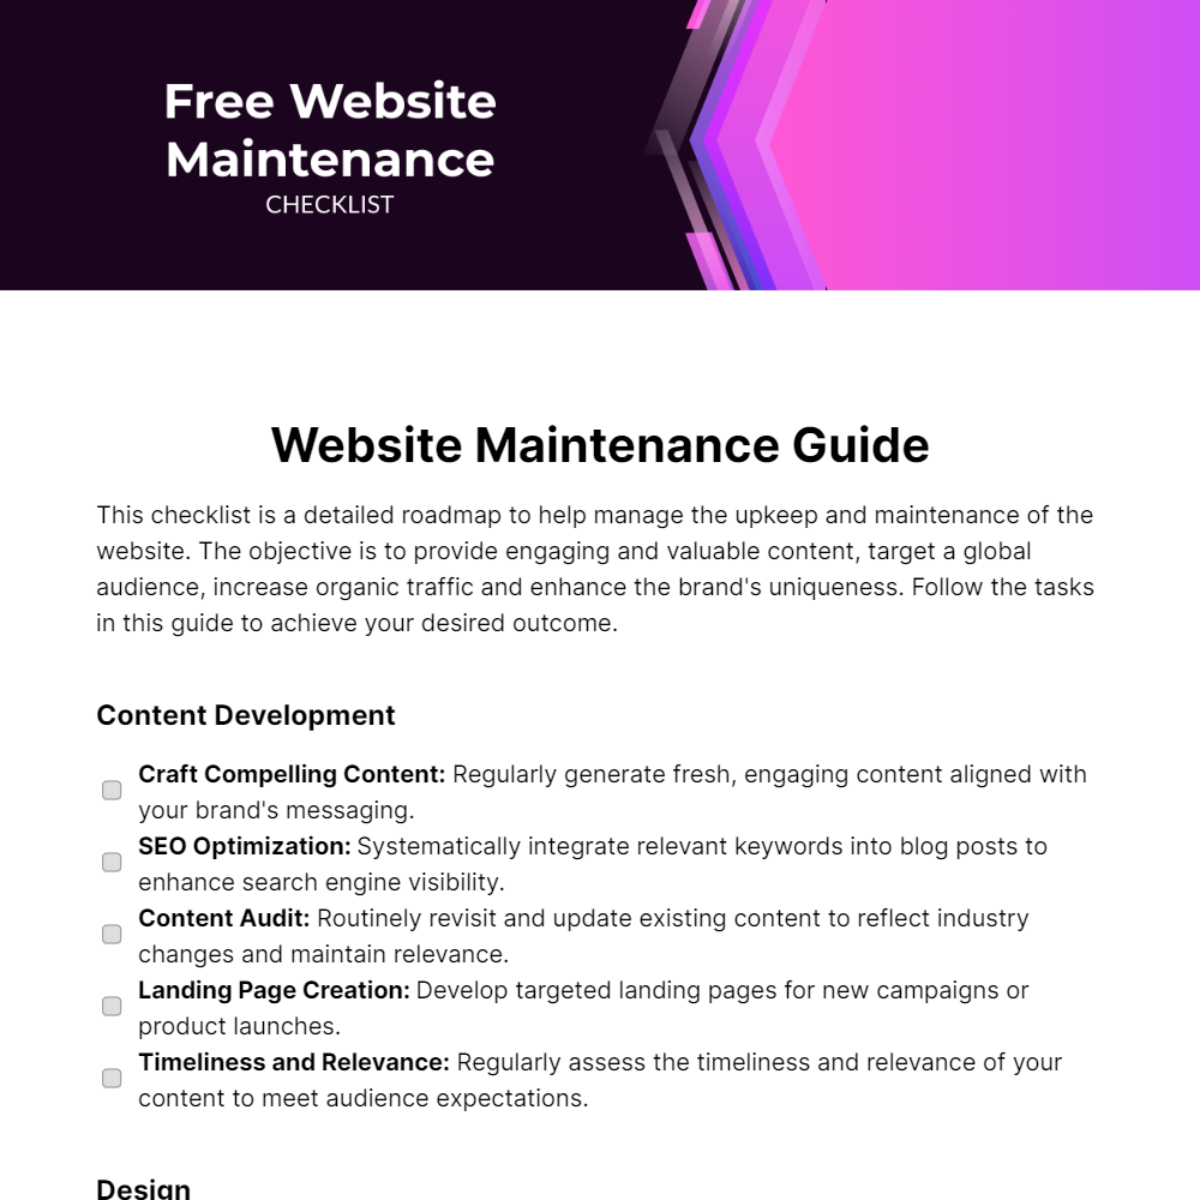 Free Website Maintenance Checklist Template